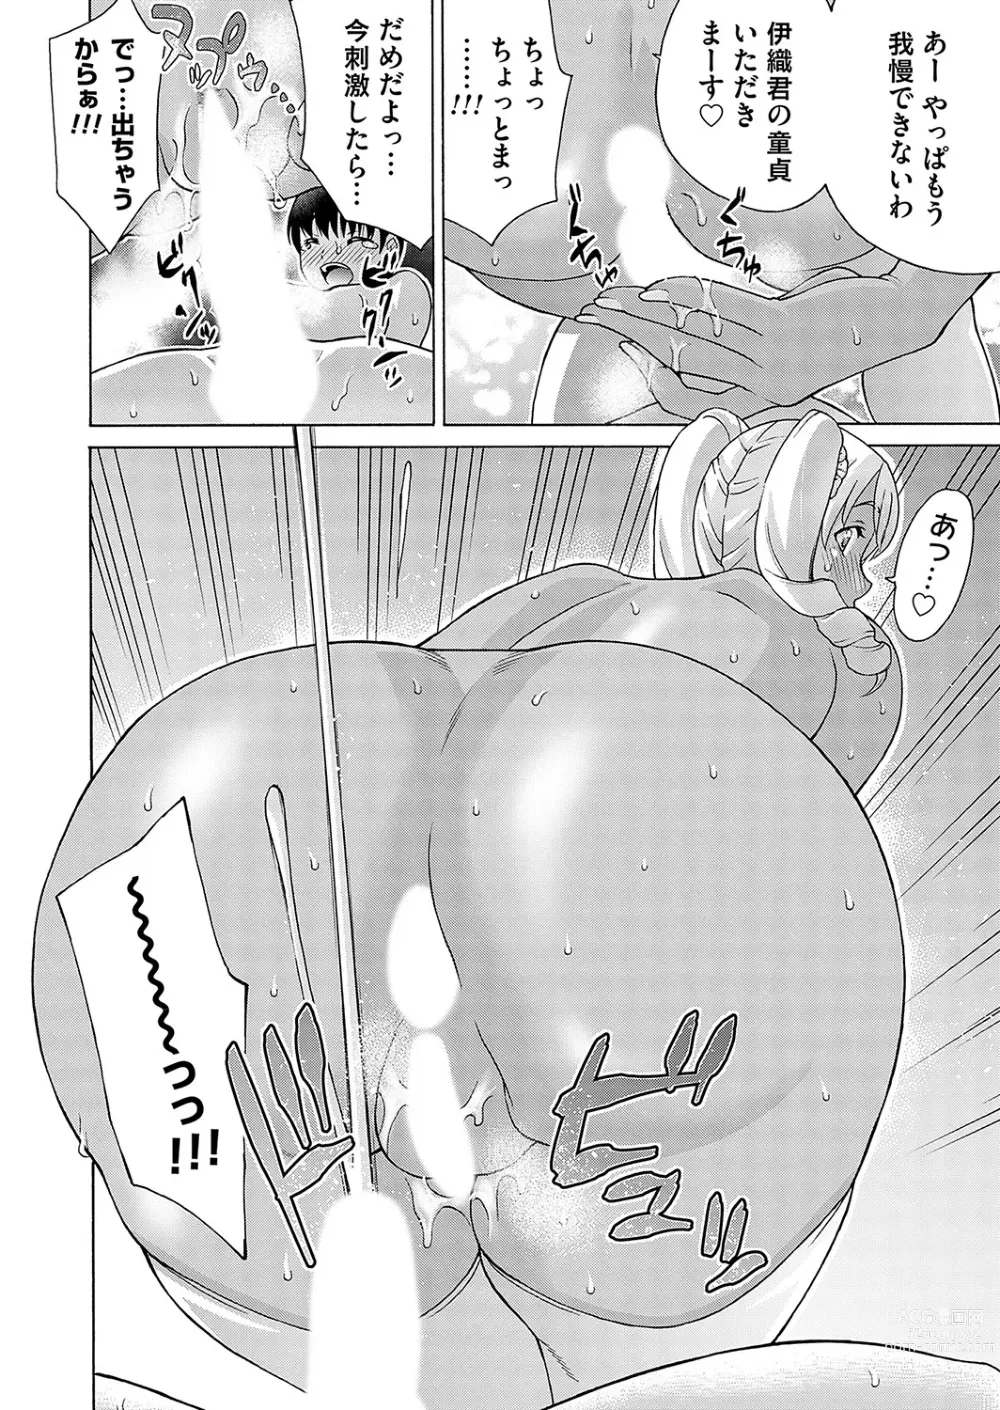 Page 173 of manga COMIC Magnum Vol. 169